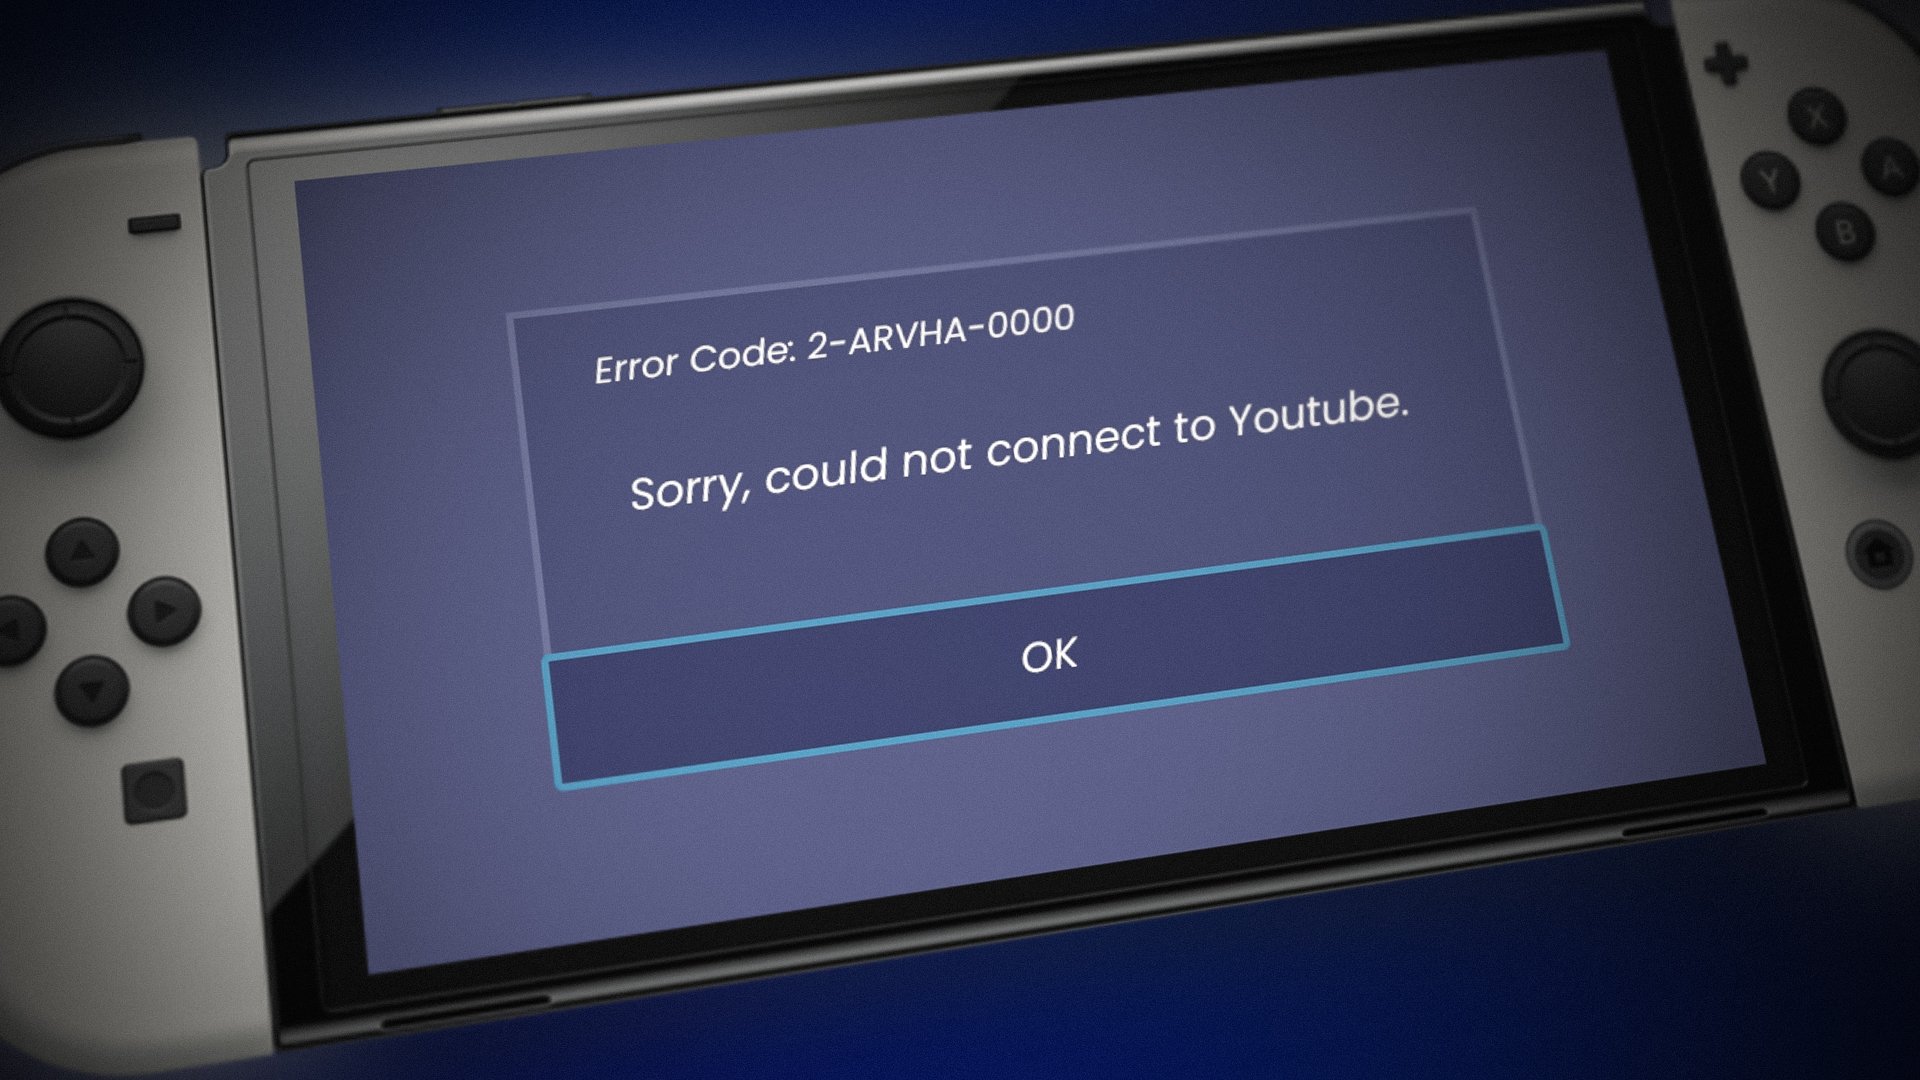 sang dybtgående Kærlig Fix: Error Code 2-ARVHA-0000 on Nintendo Switch? - Appuals.com